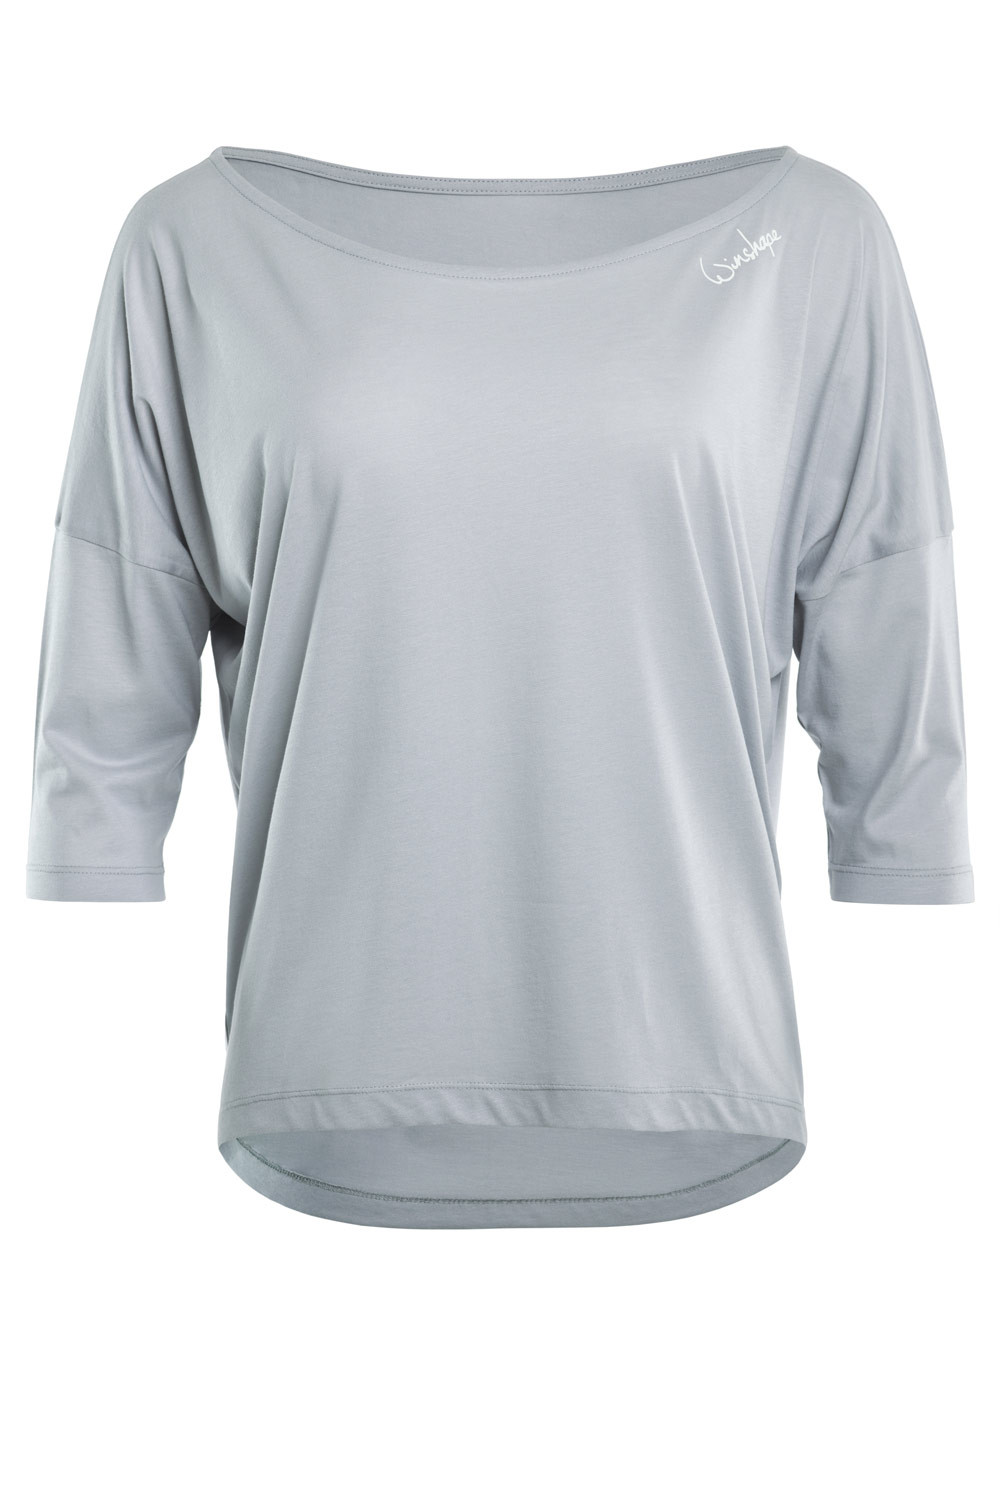 Ultra leichtes Style Shirt grey, Winshape cool MCS001, Dance Modal-3/4-Arm